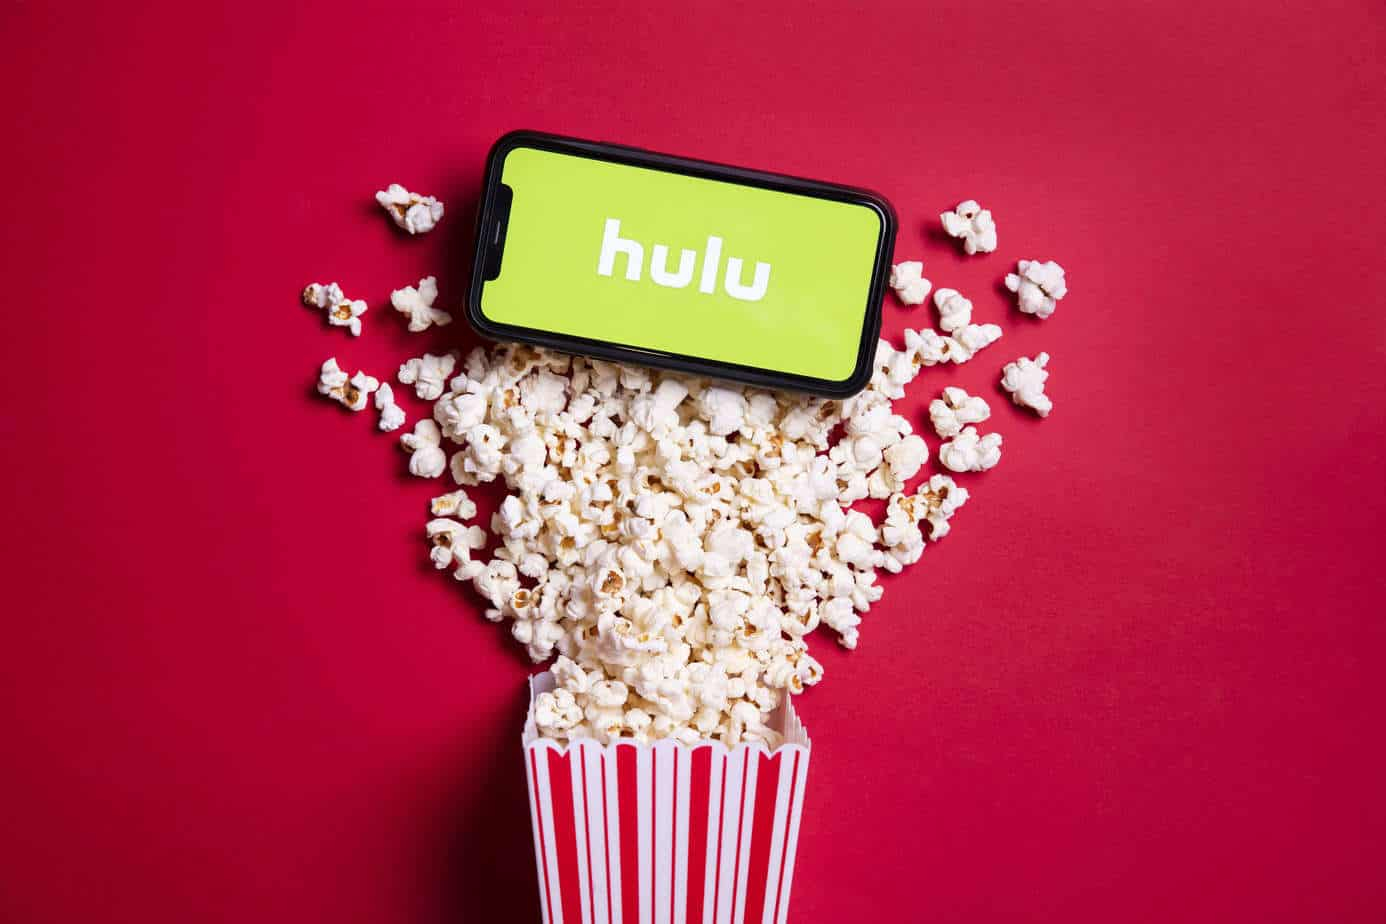 hulu parental controls - hulu app logo phone screen with popcorn in the background